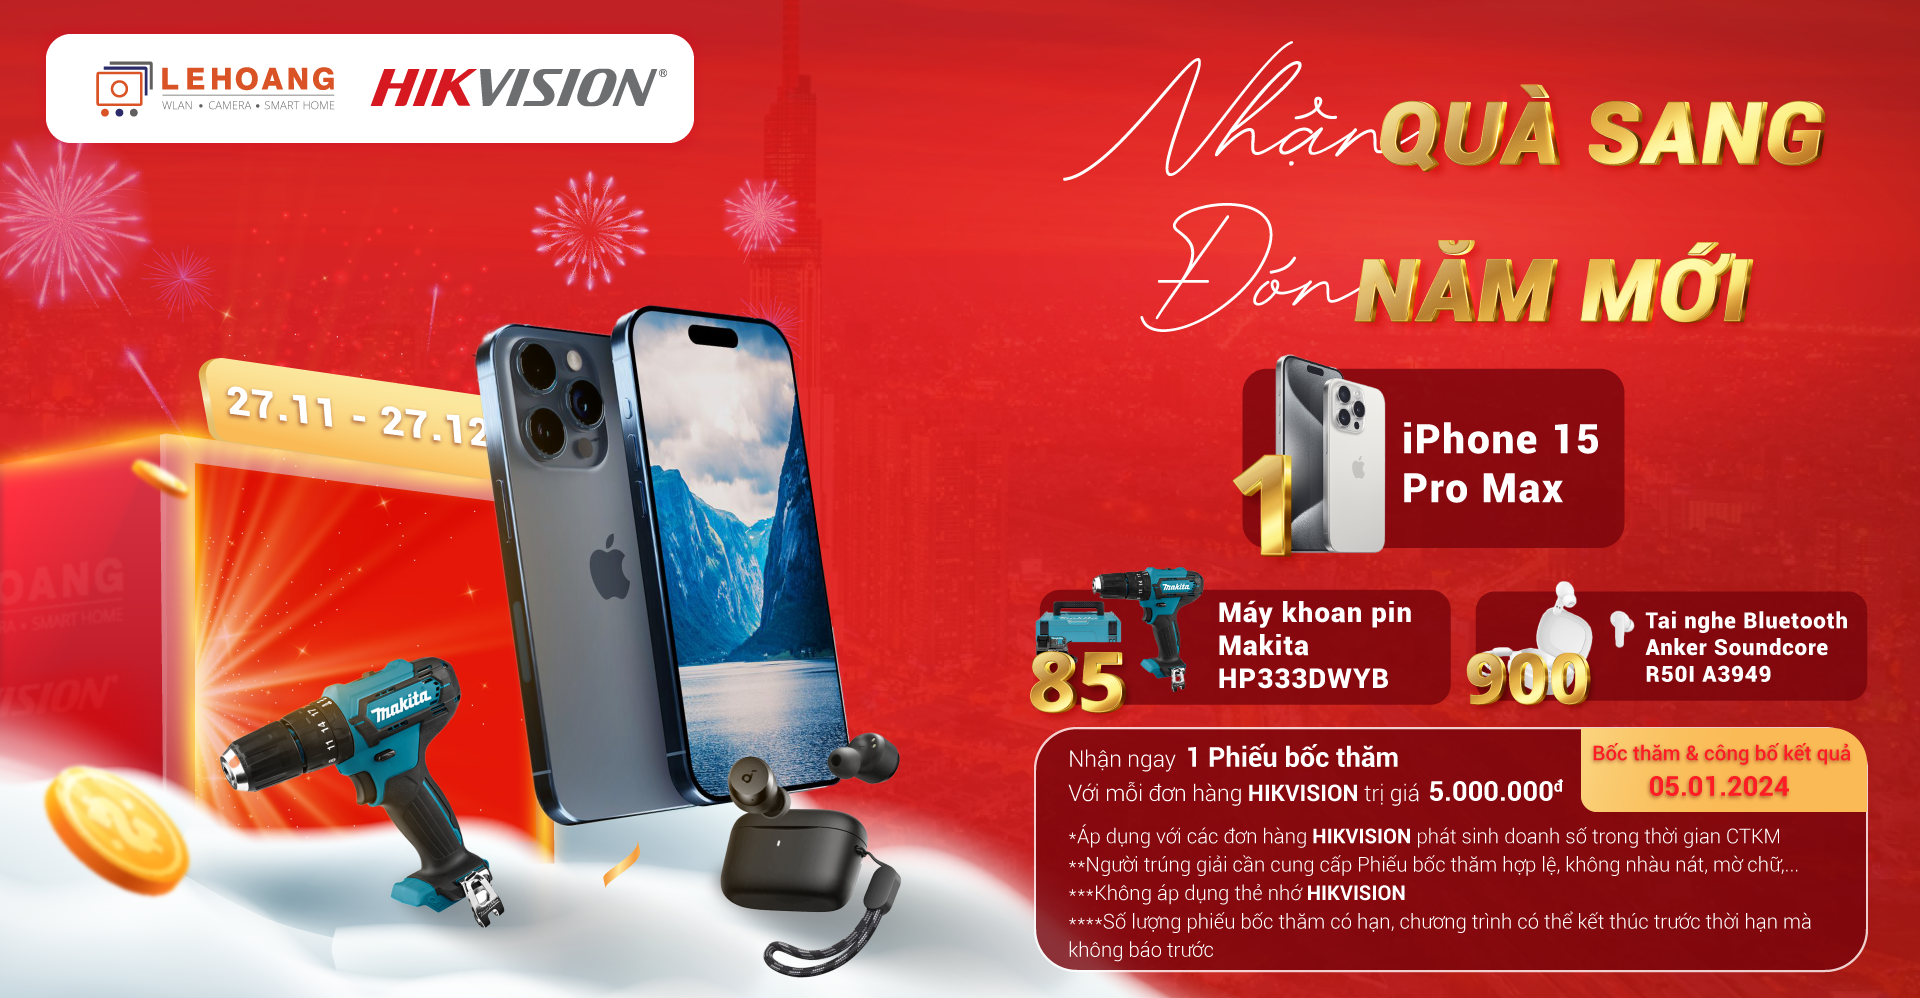 nhan-qua-sang-don-nam-moi-lucky-draw-iphone-15-pro-max-hikvision-vietnam